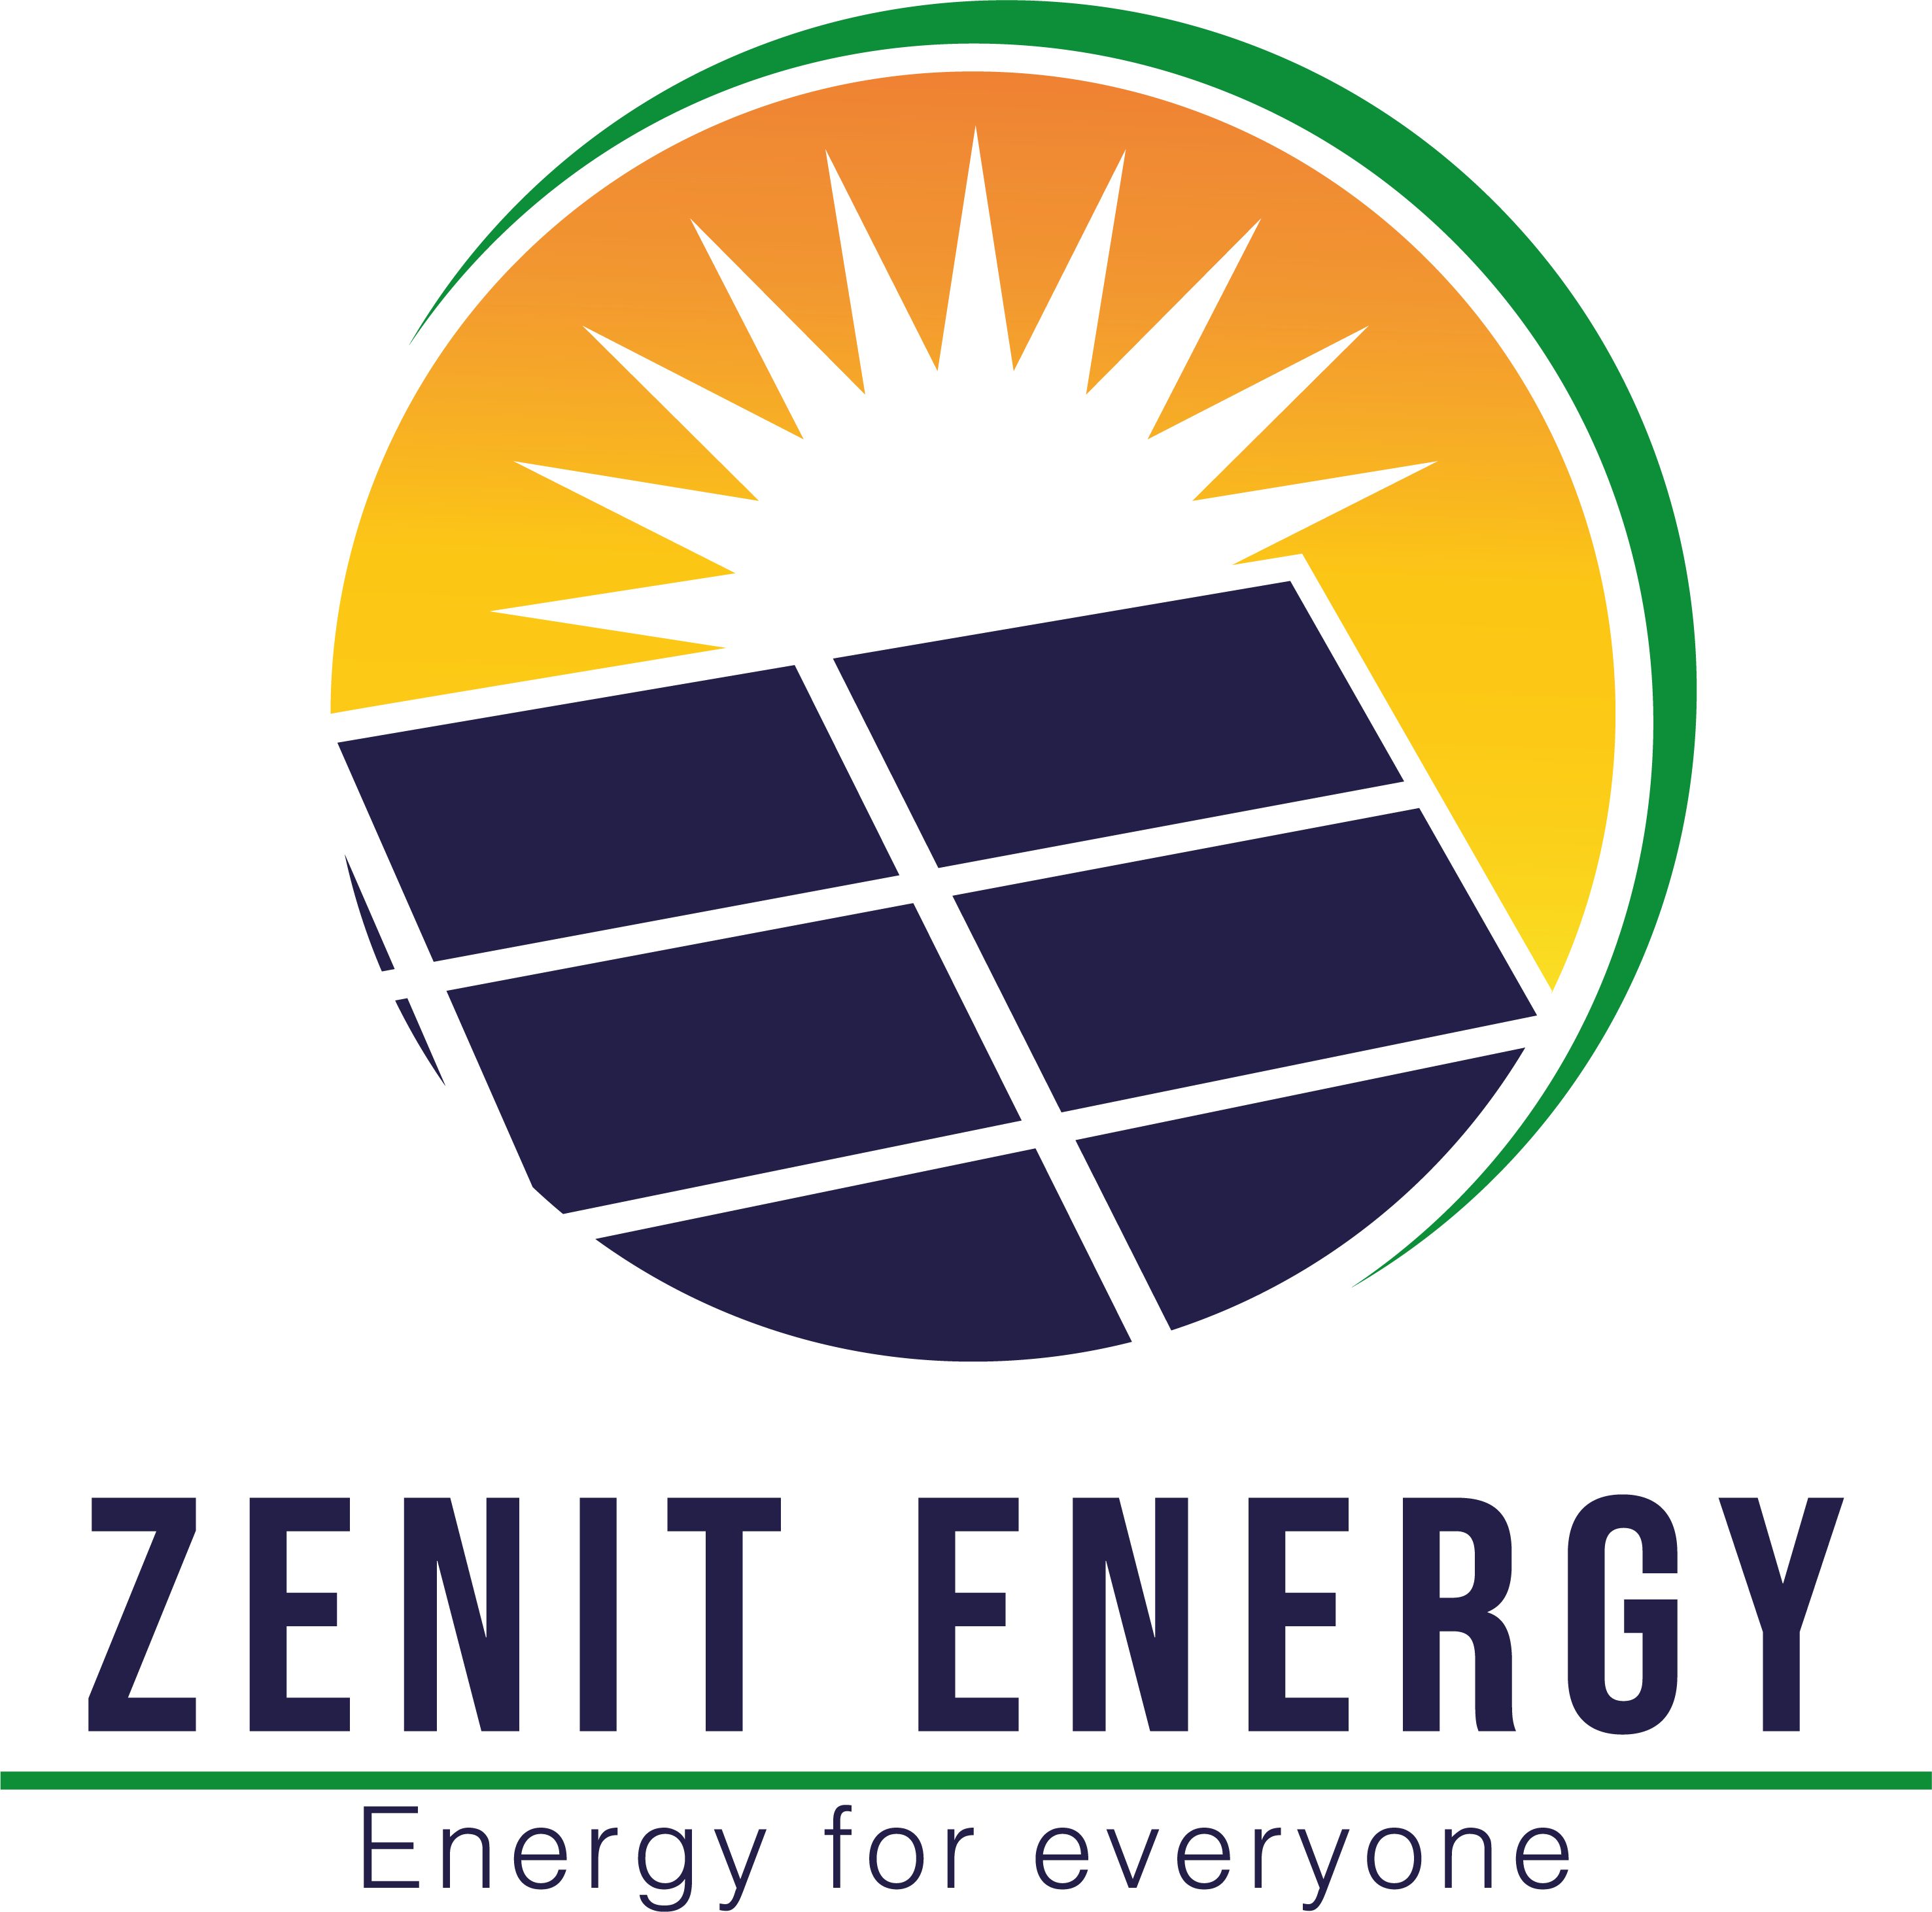 Zenit Energy GmbH